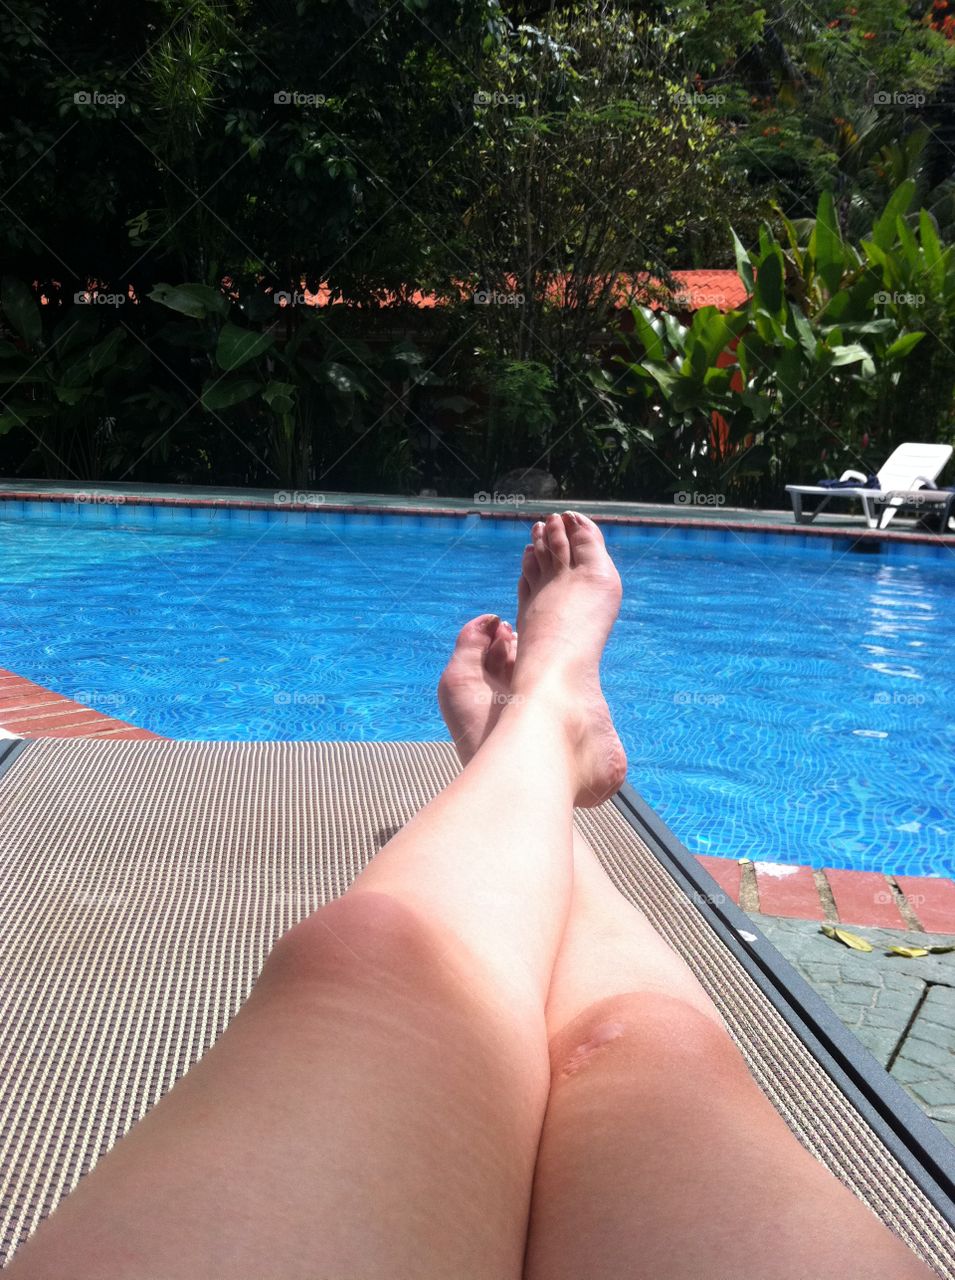 Relaxing on pool